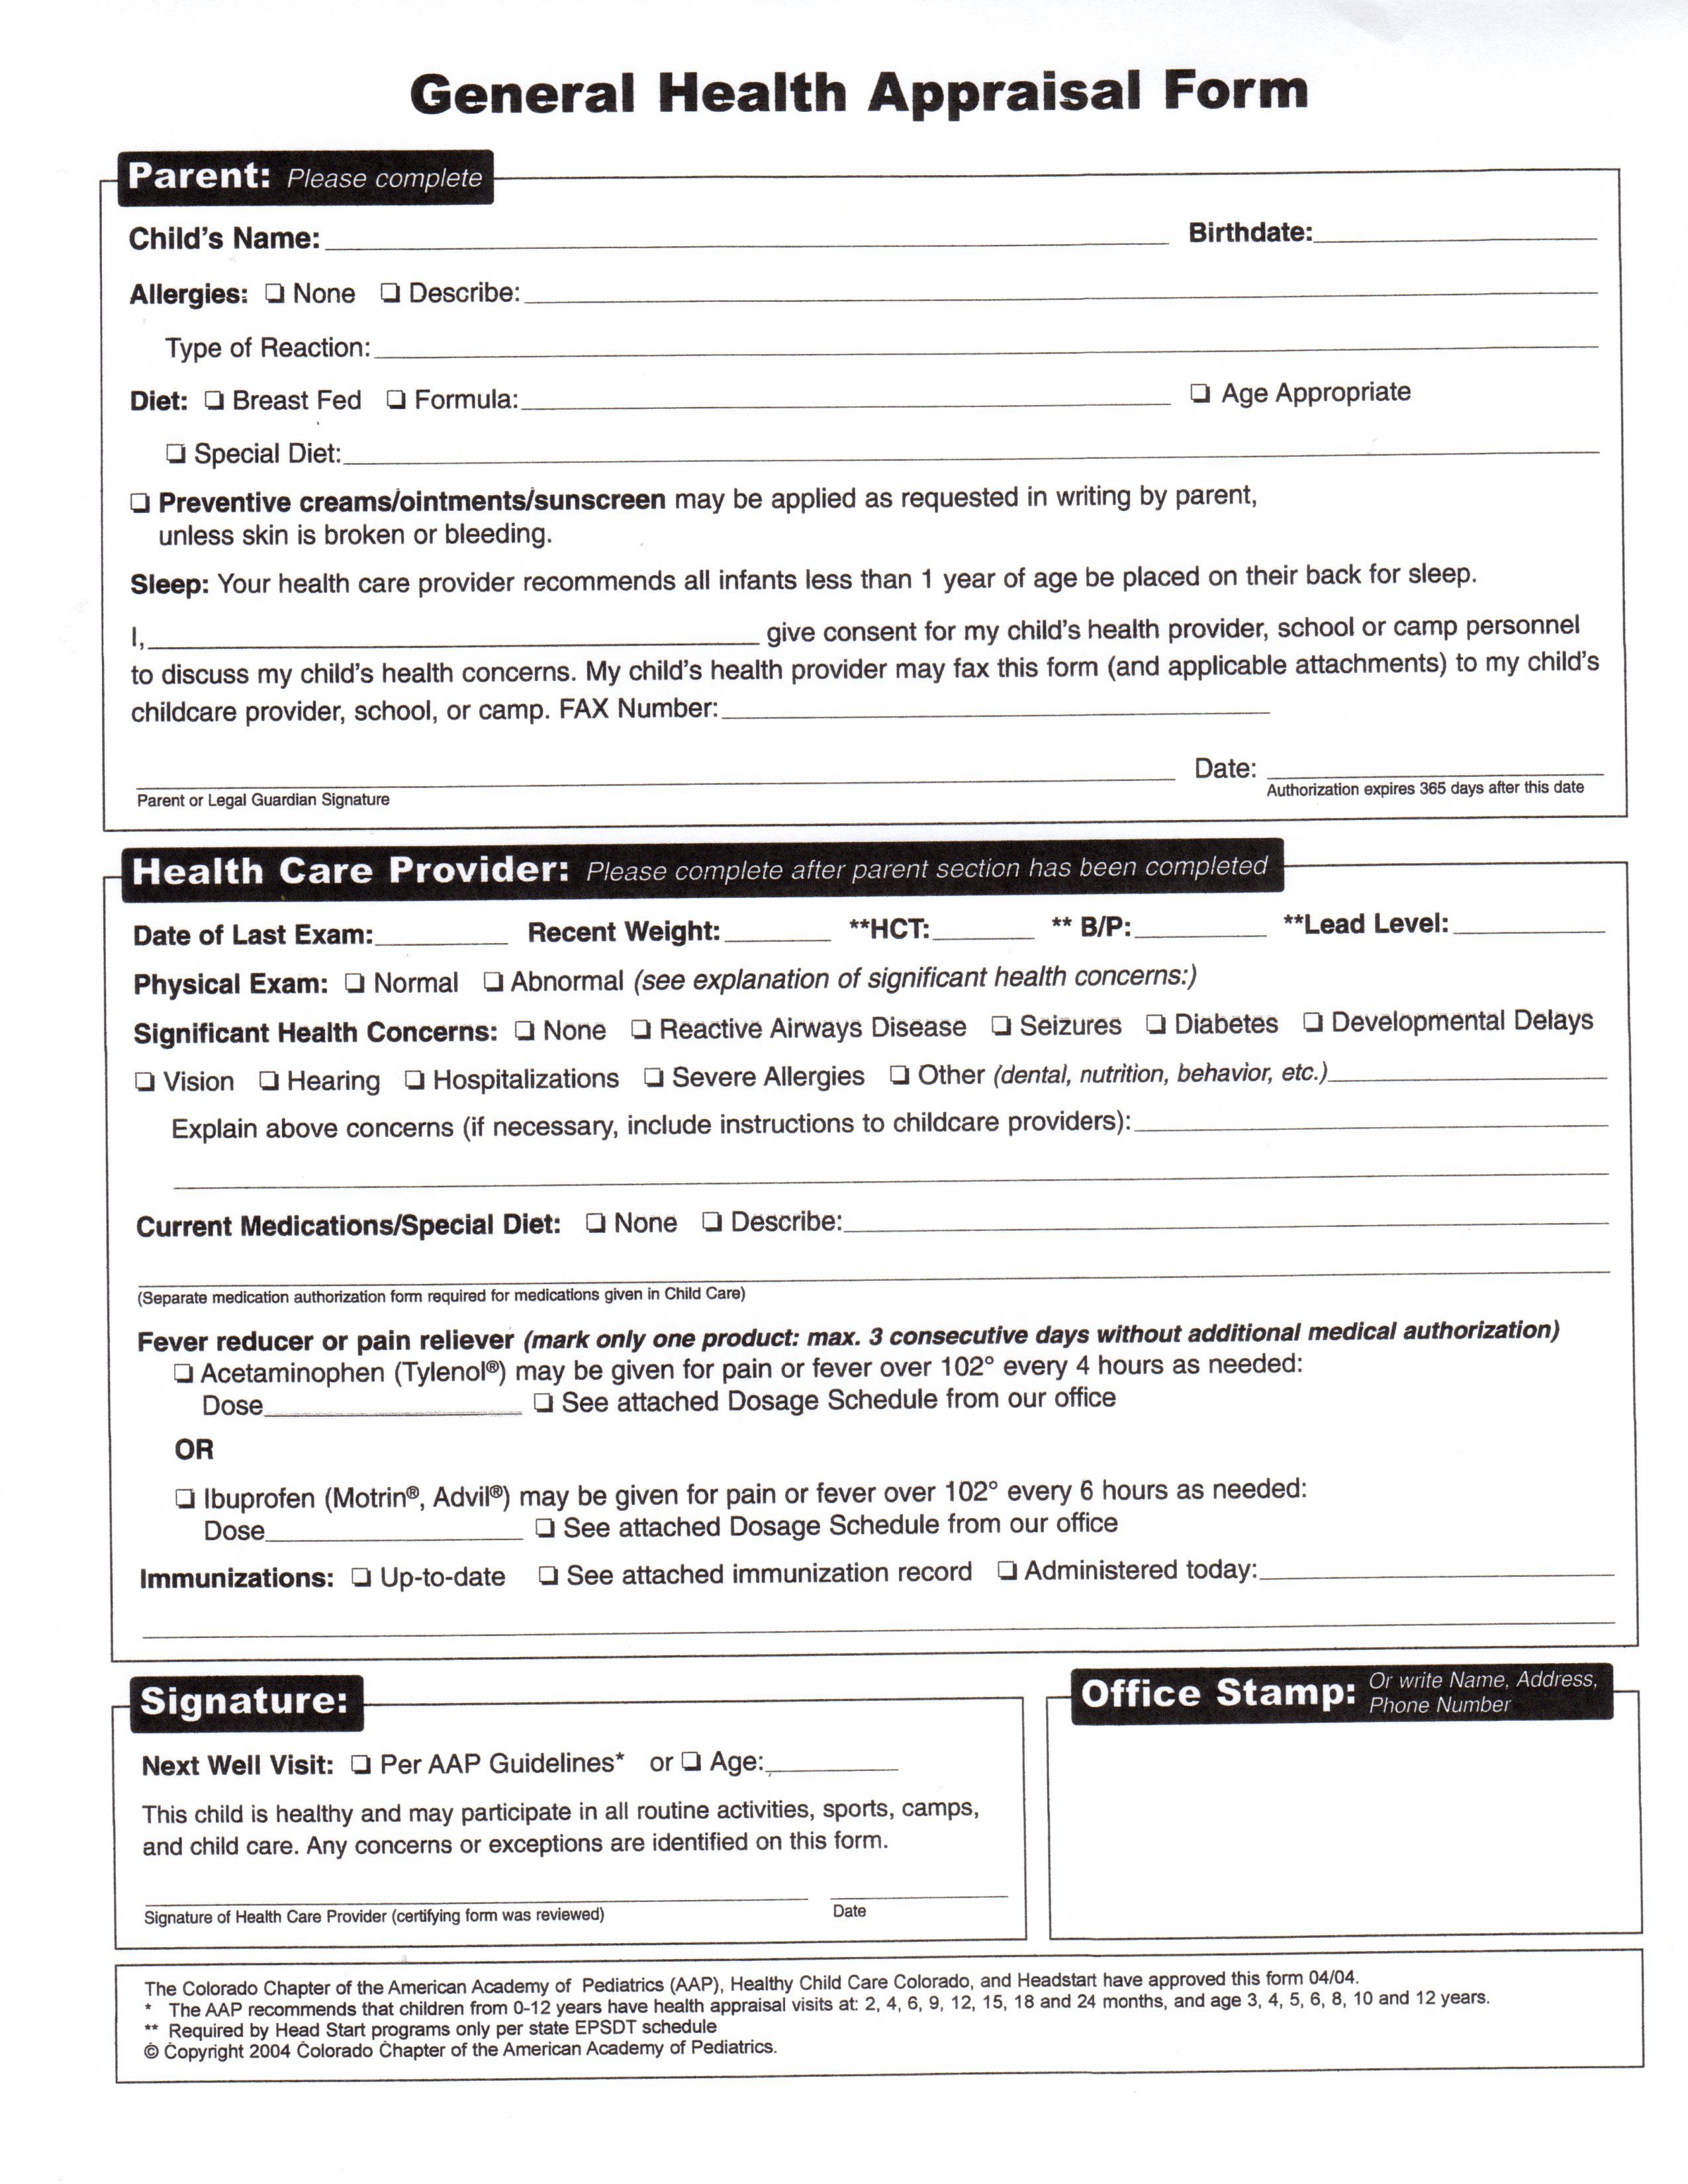 General Health Appraisal Form 2015 Augustana Lutheran Church Denver CO